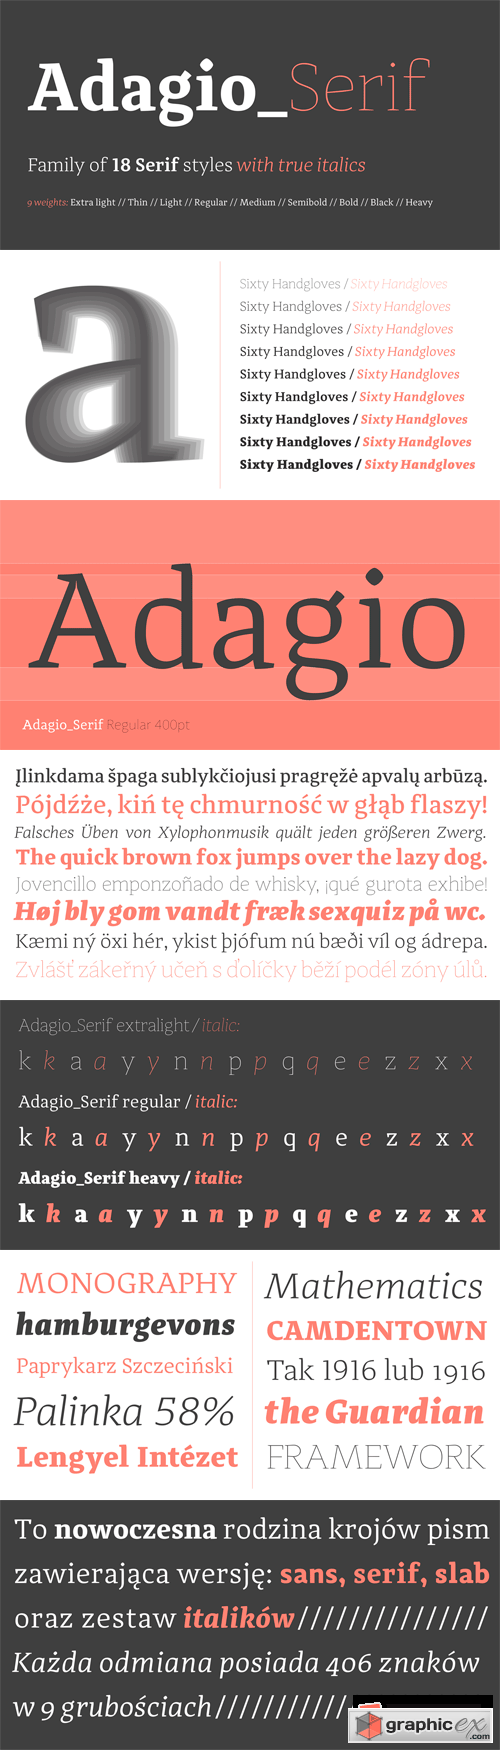 Adagio Serif Font Family - 18 Fonts for $270